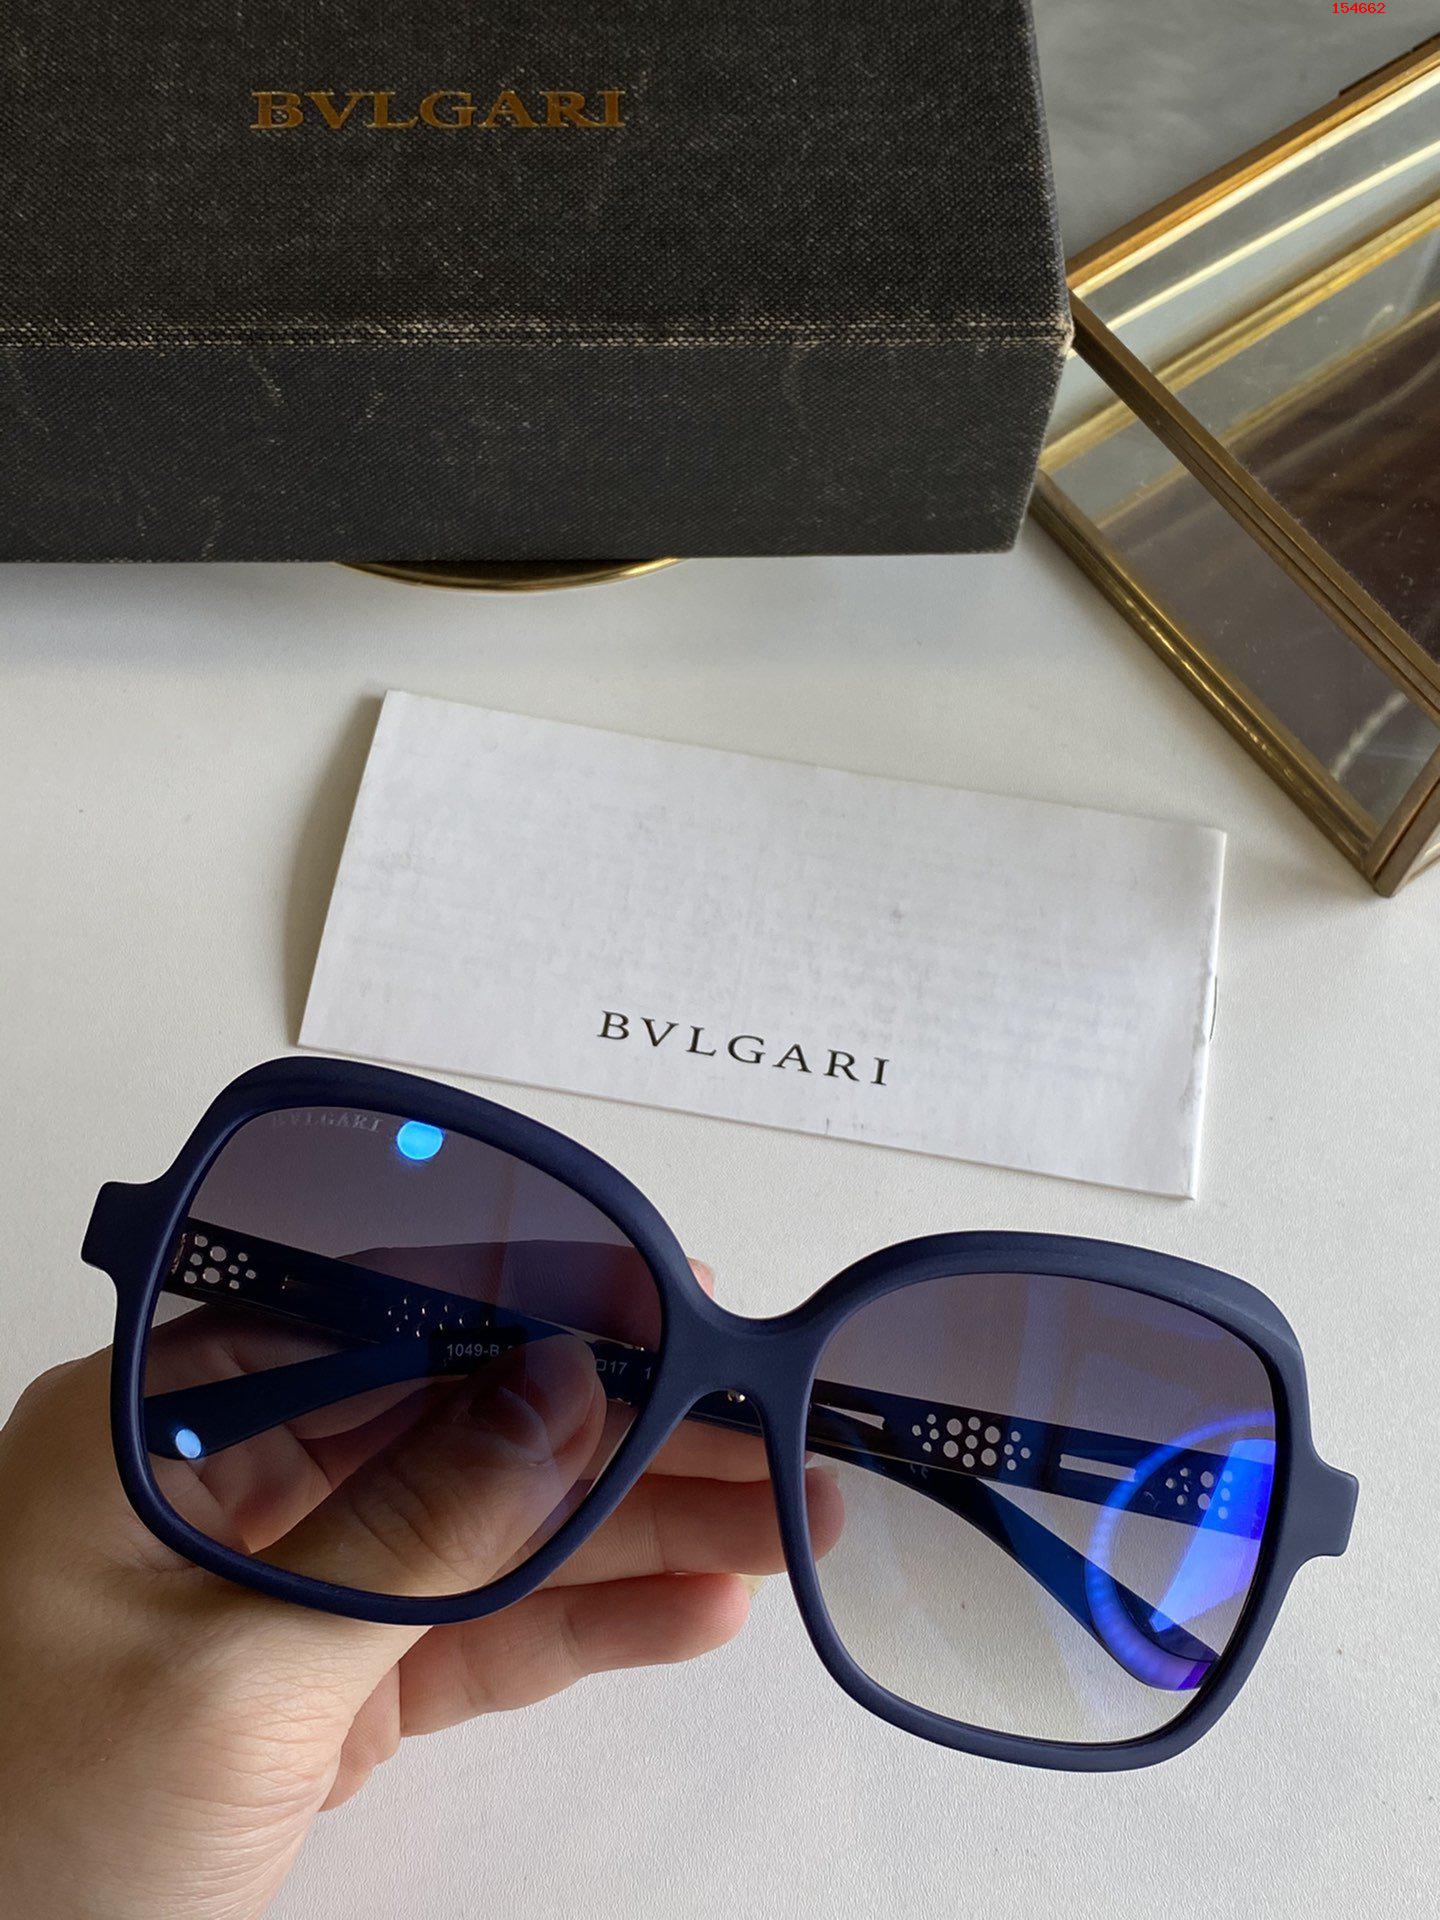 BVLGAR Model:BV 高仿名牌眼镜/太阳镜 精仿名牌眼镜/太阳镜 原版名牌眼镜/太阳镜 A货名牌眼镜/太阳镜 原单名牌眼镜/太阳镜 